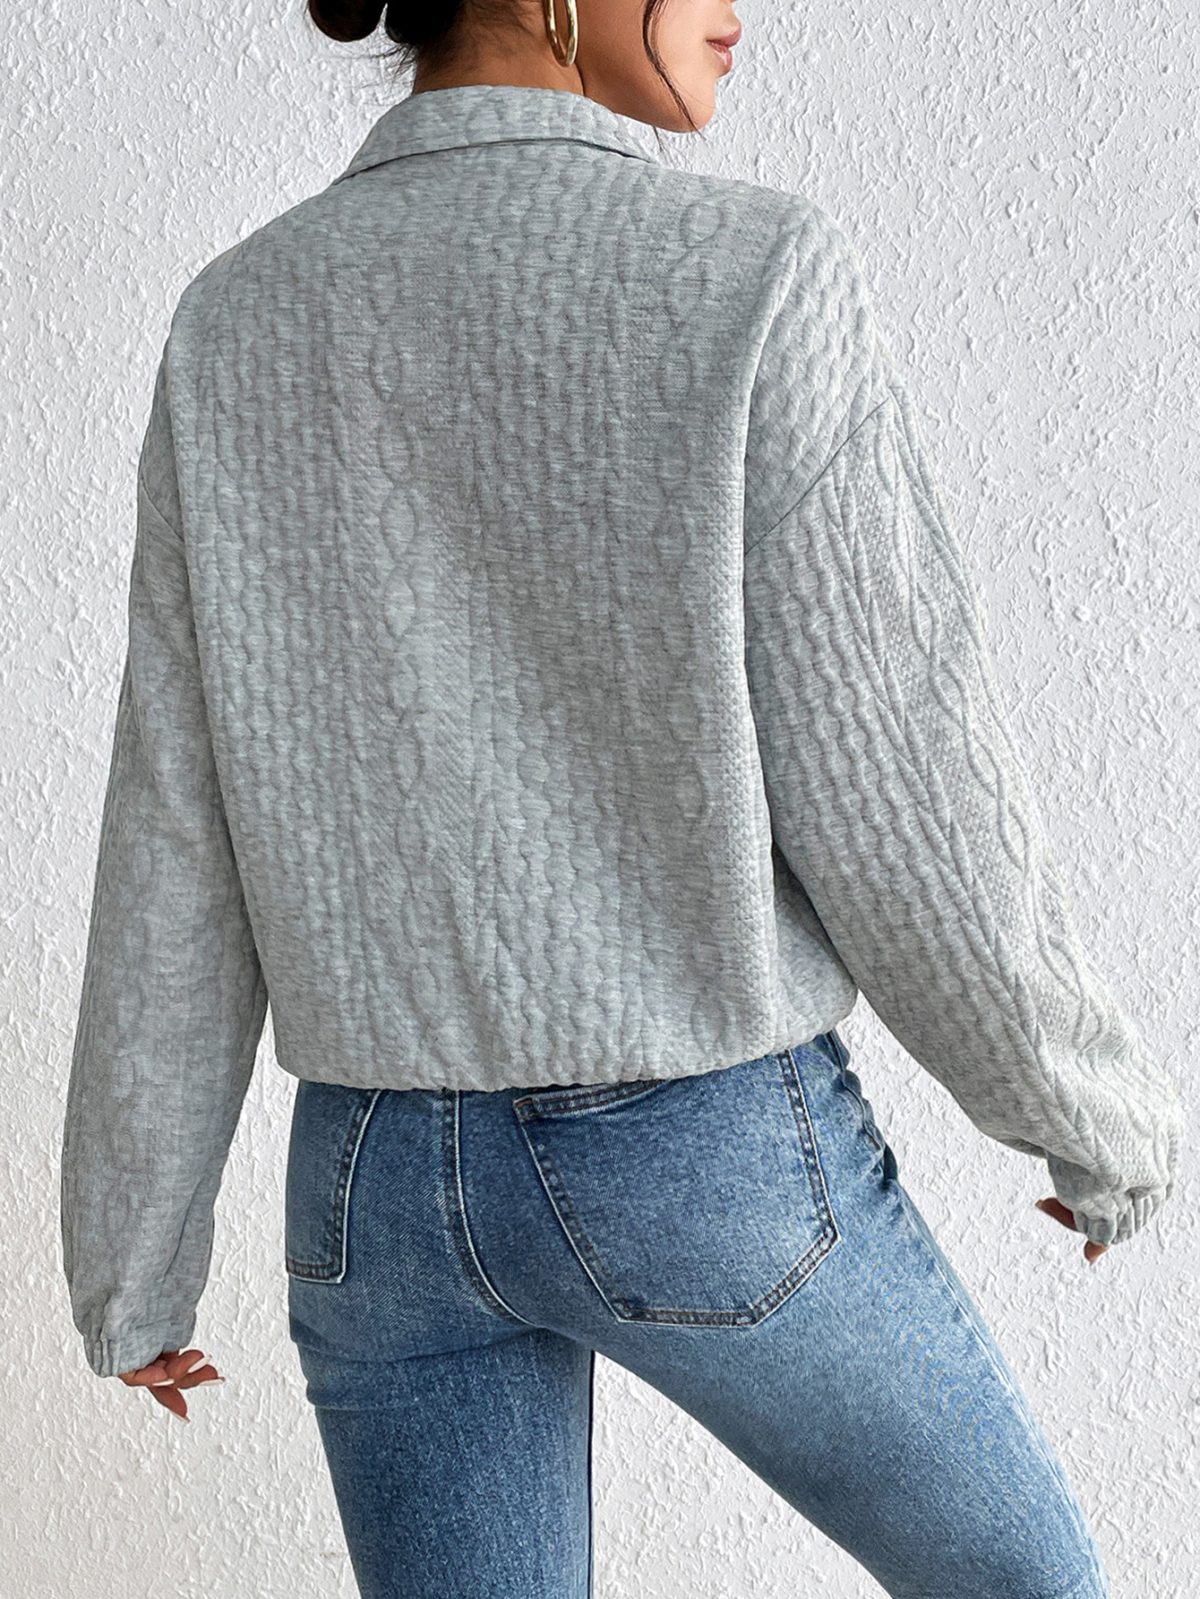 Solid Color Long Sleeve Zipper Sweatshirt in Hoodies & Sweatshirts